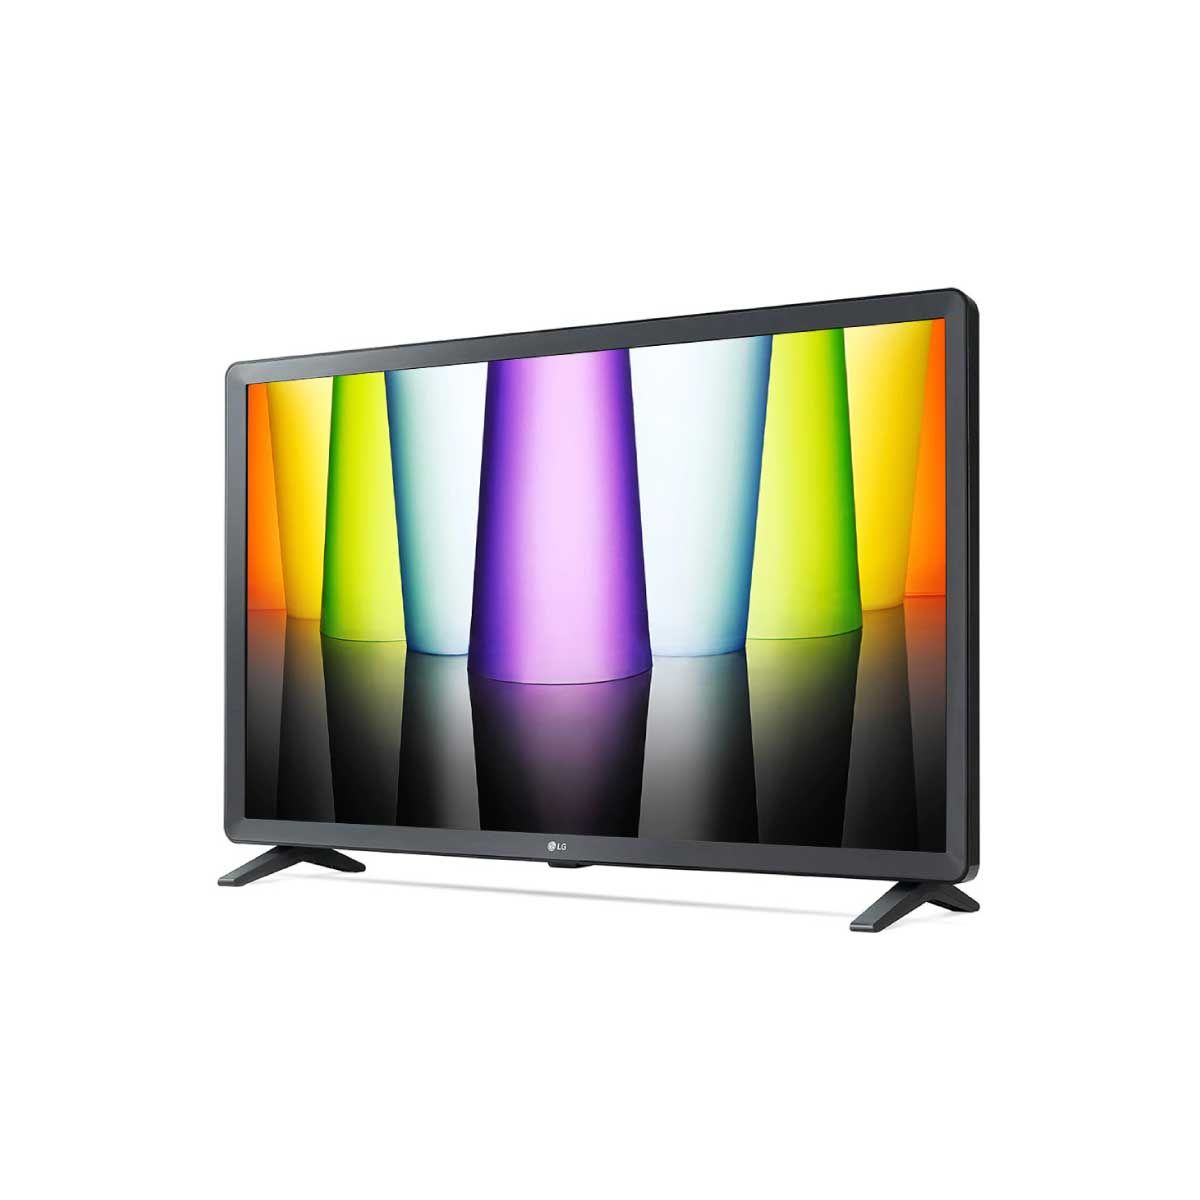 LG HD AI Smart TV รุ่น 32LQ630BPSA  สมาร์ททีวี ขนาด 32 นิ้ว LG ThinQ AI Ready